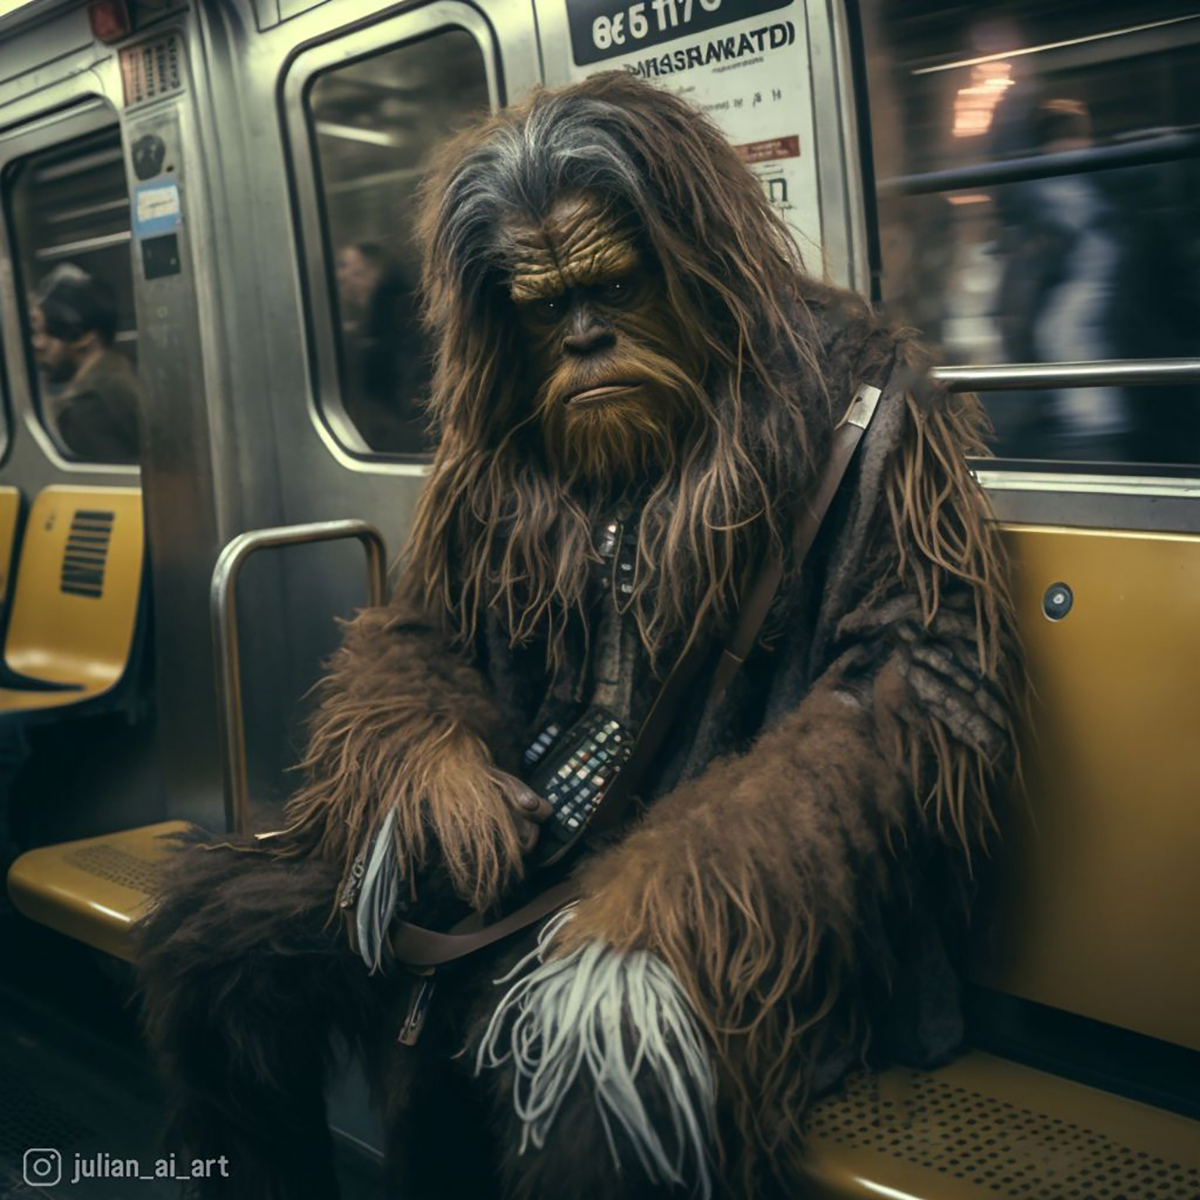 A.I. Art movie characters subway